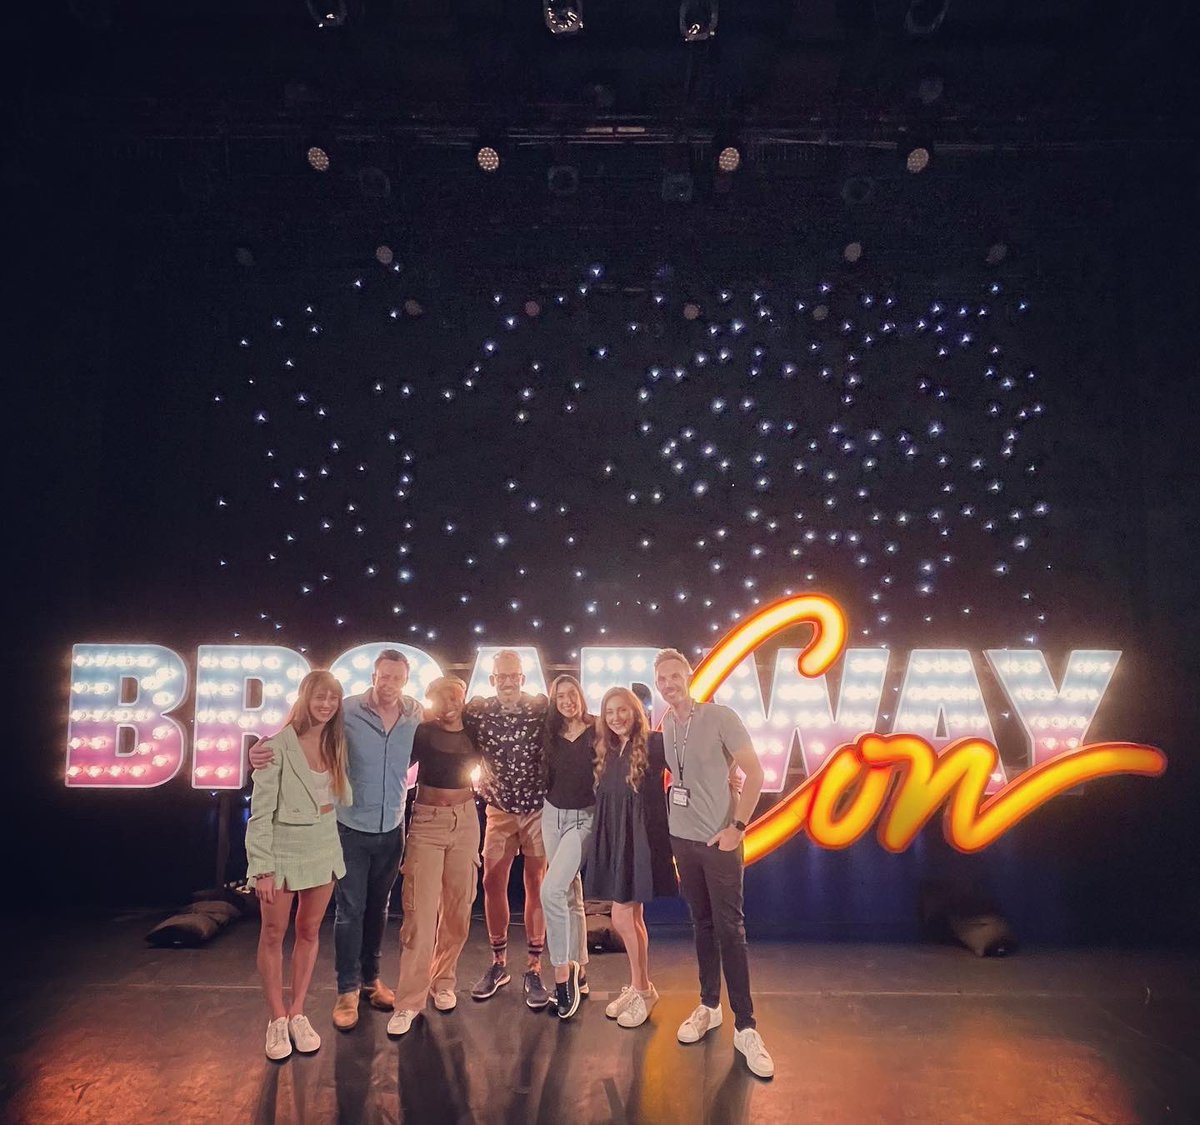 Thanks for having us @bwaycon! We had a blast shining the spotlight on the swings, understudies, & standbys. #BroadwayCon #broadway #BroadwayCon2022